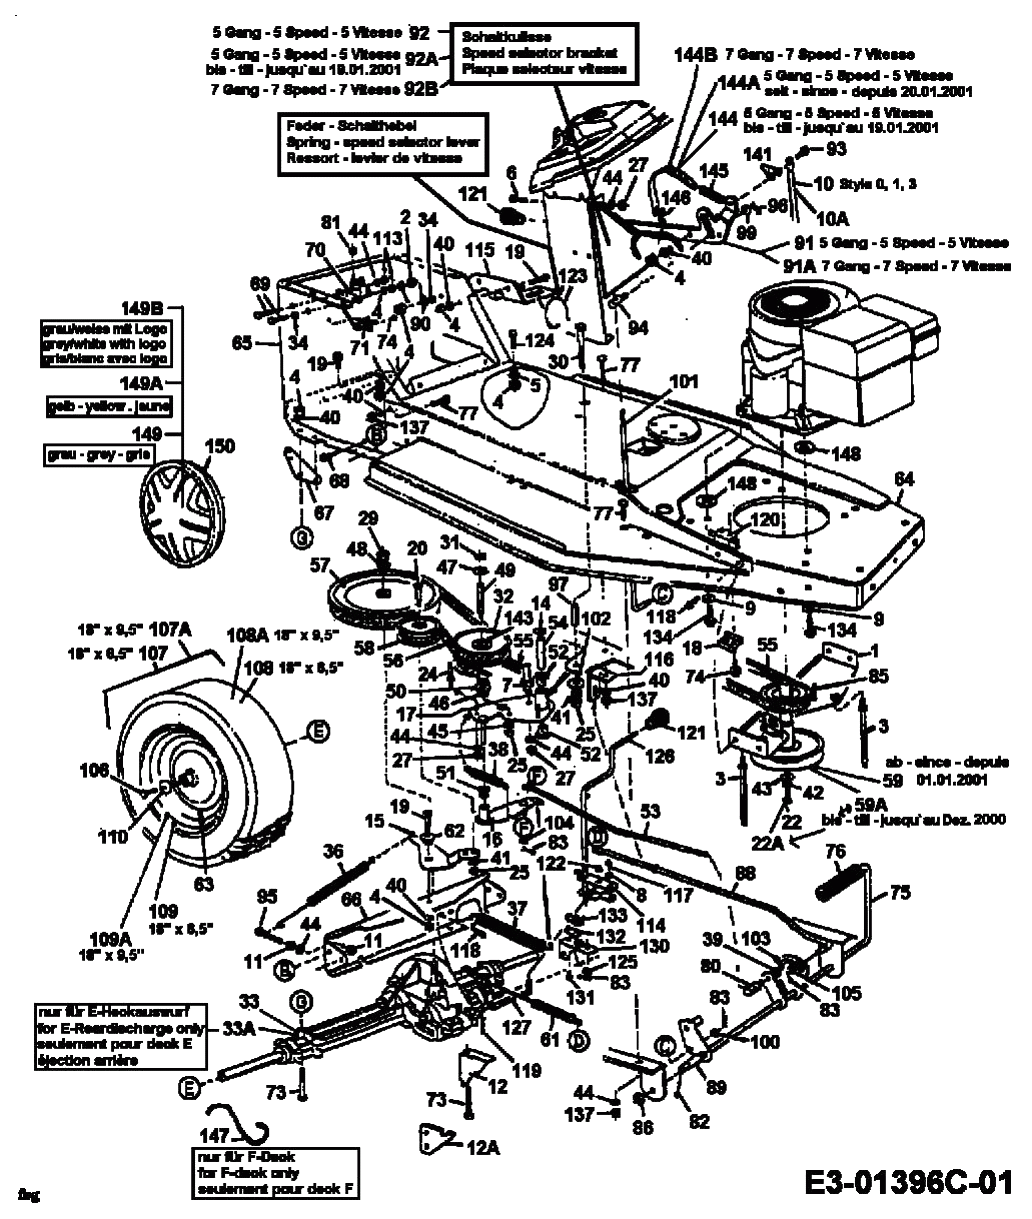 MTD Артикул 13AC450C600 (год выпуска 2002). Система привода, шкив двигателя, педали, задние колеса